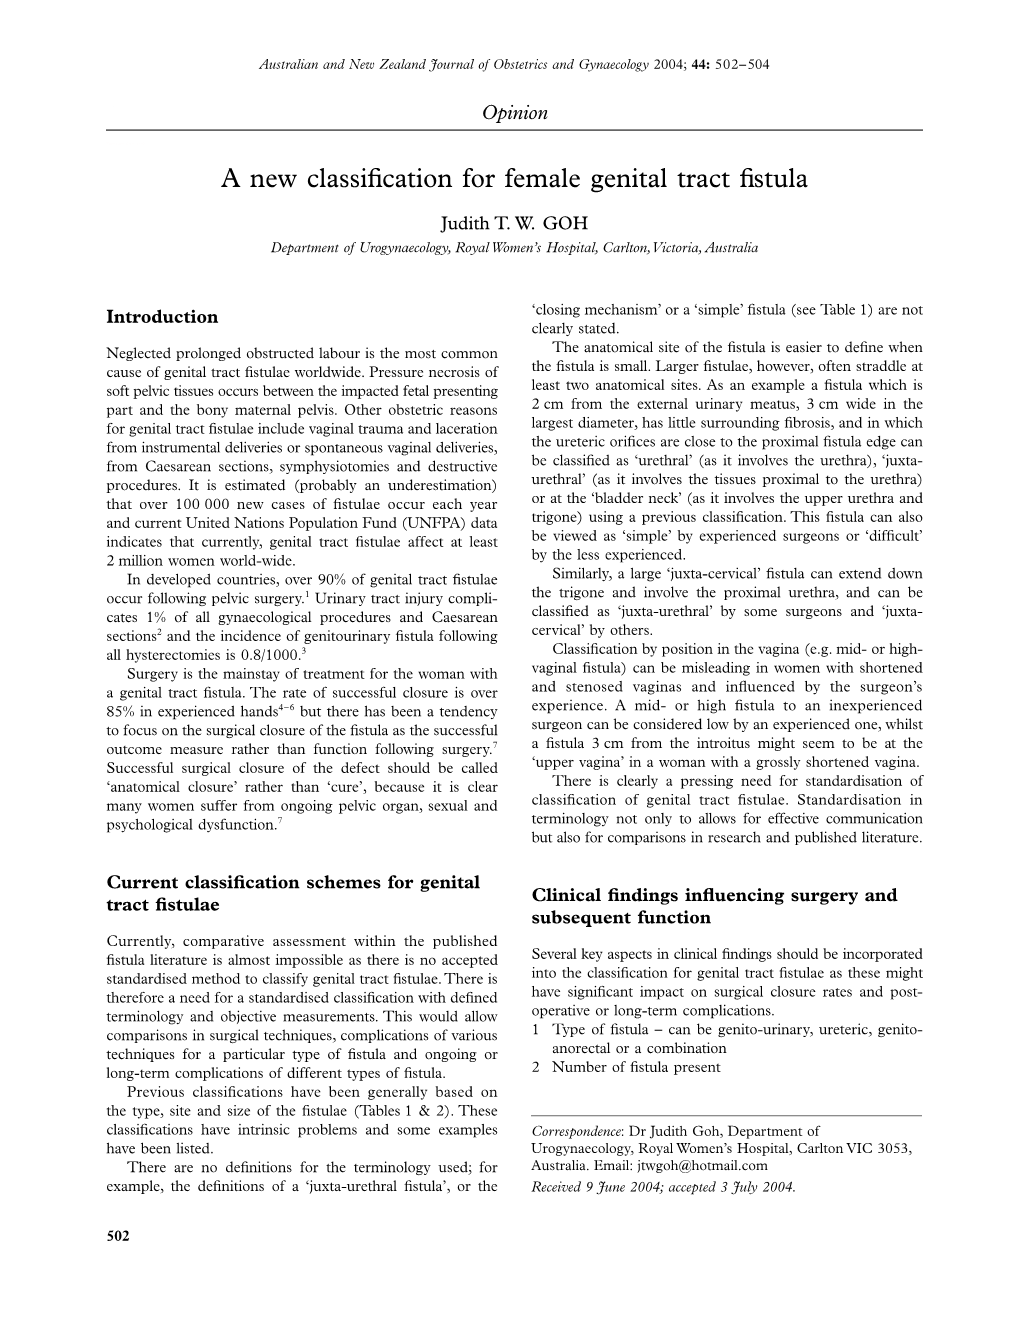 A New Classification for Female Genital Tract Fistula